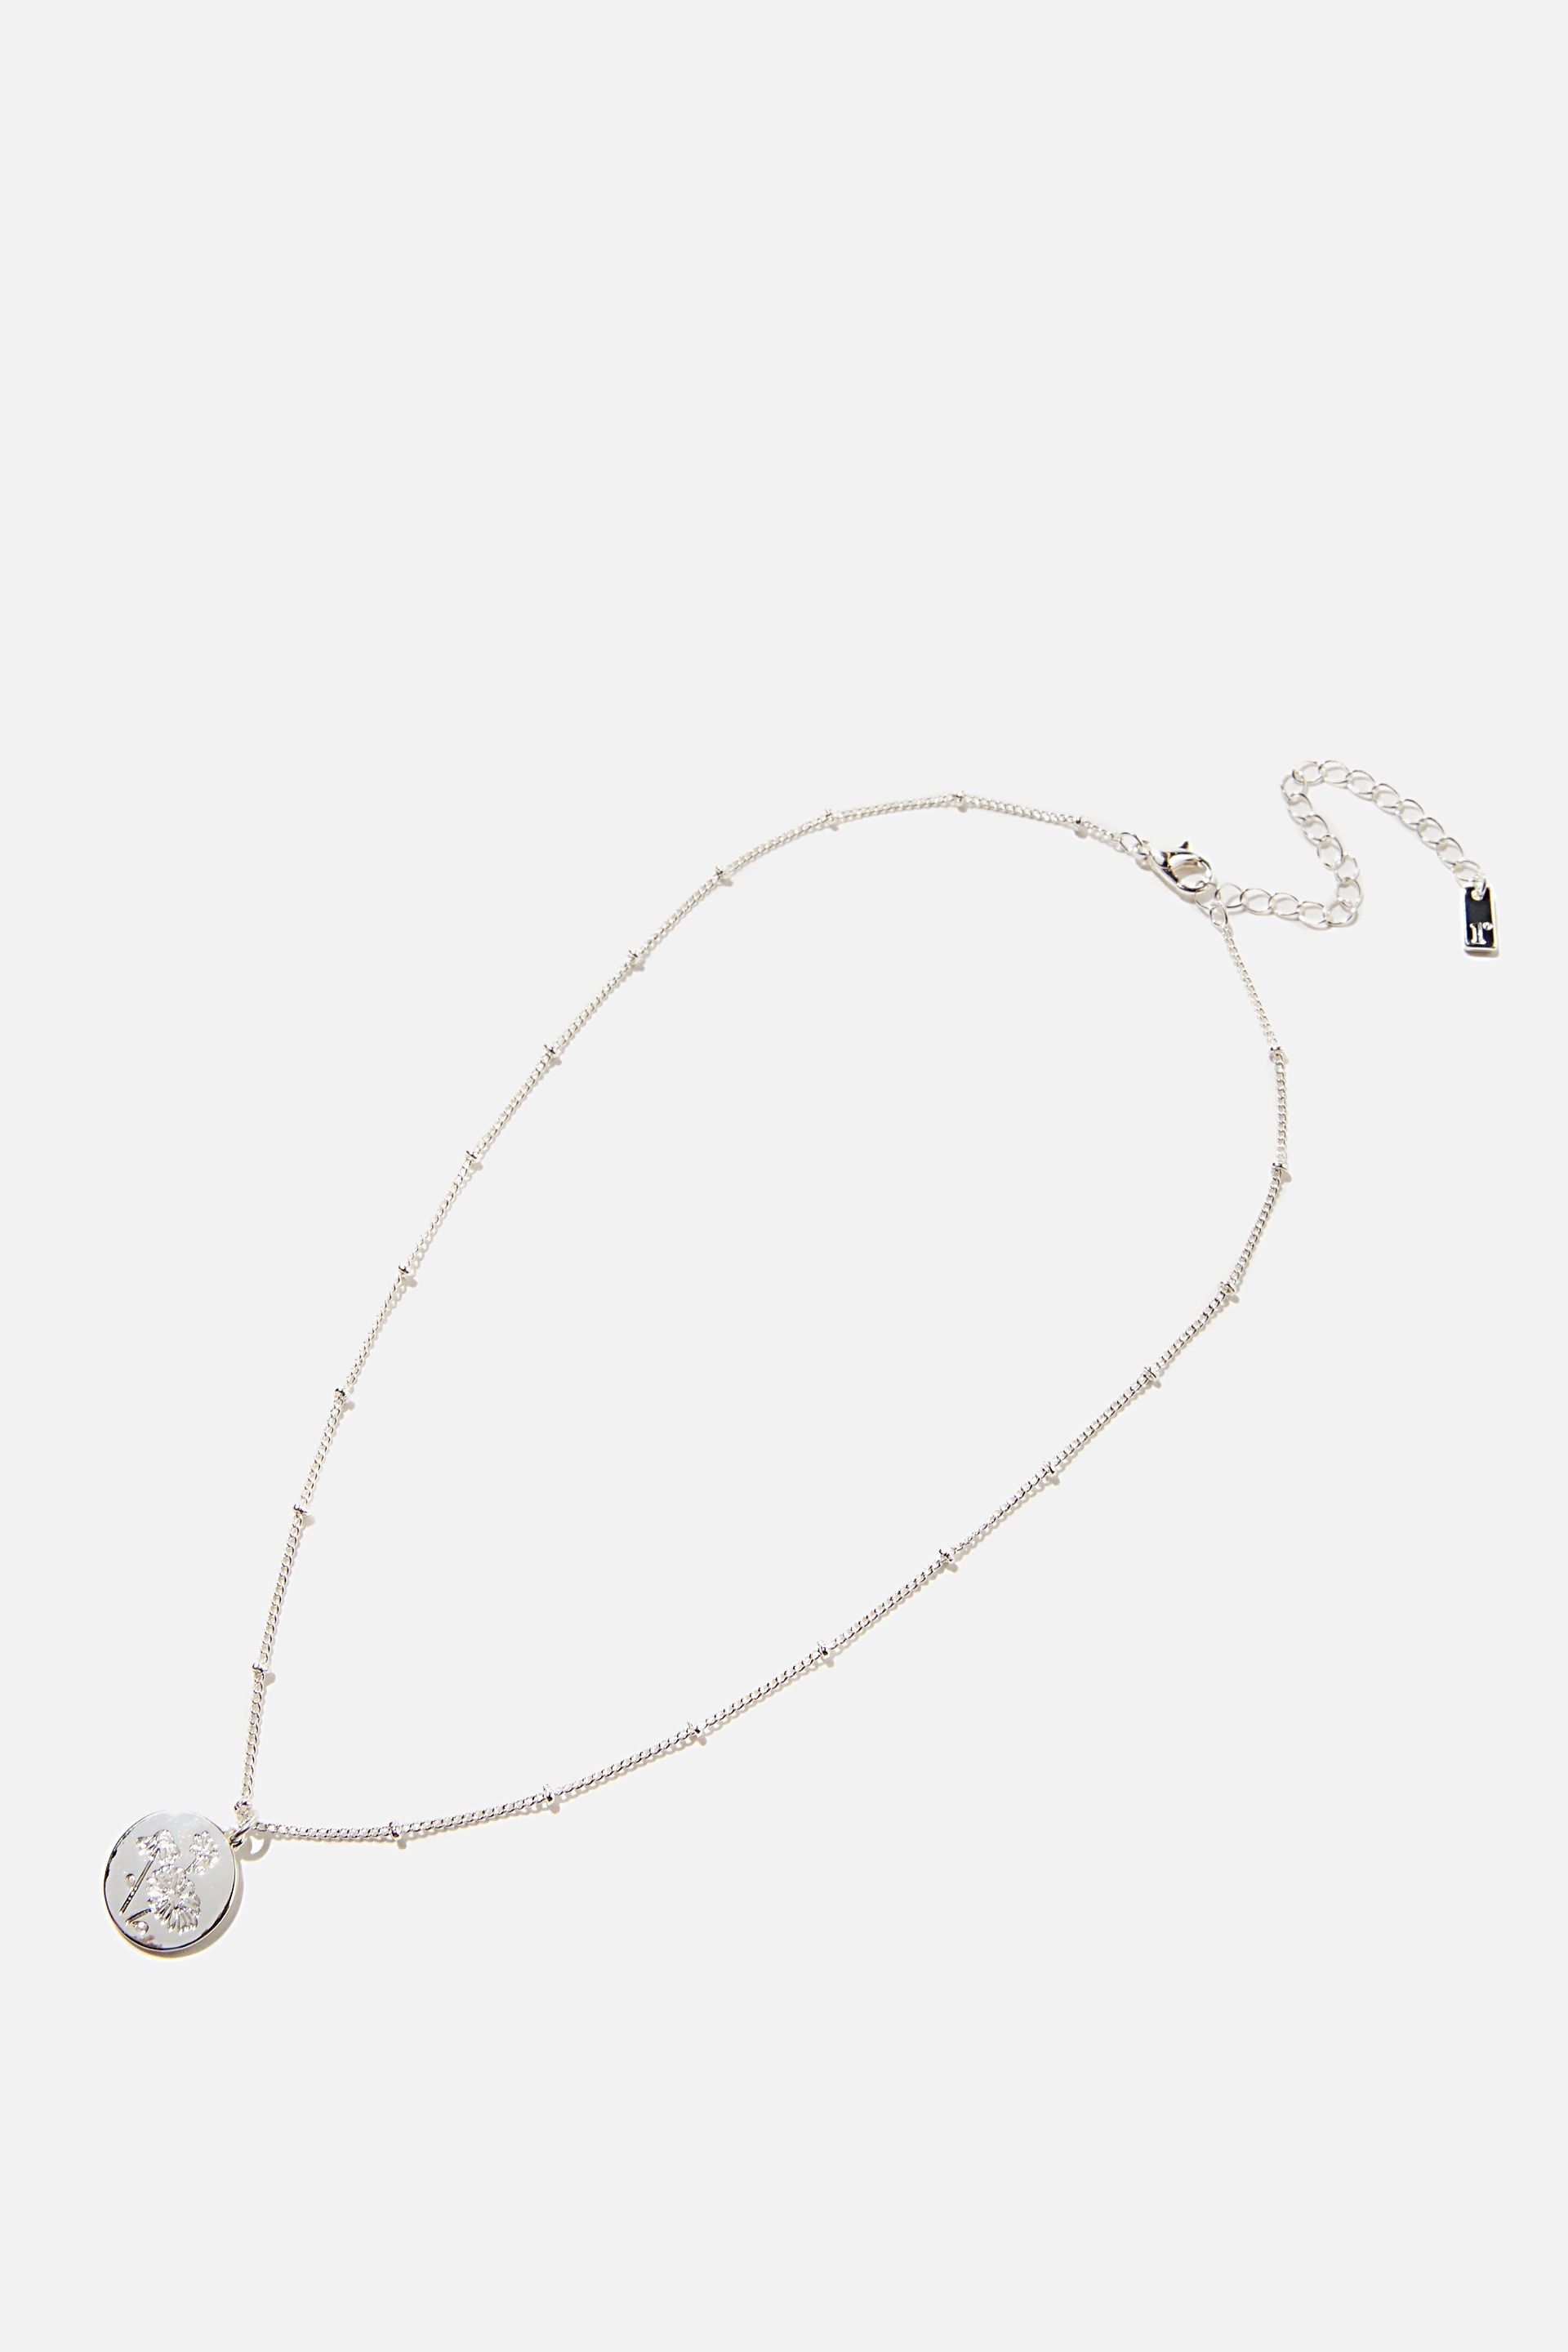 Rubi - Reloved Pendant Necklace - Silver floral